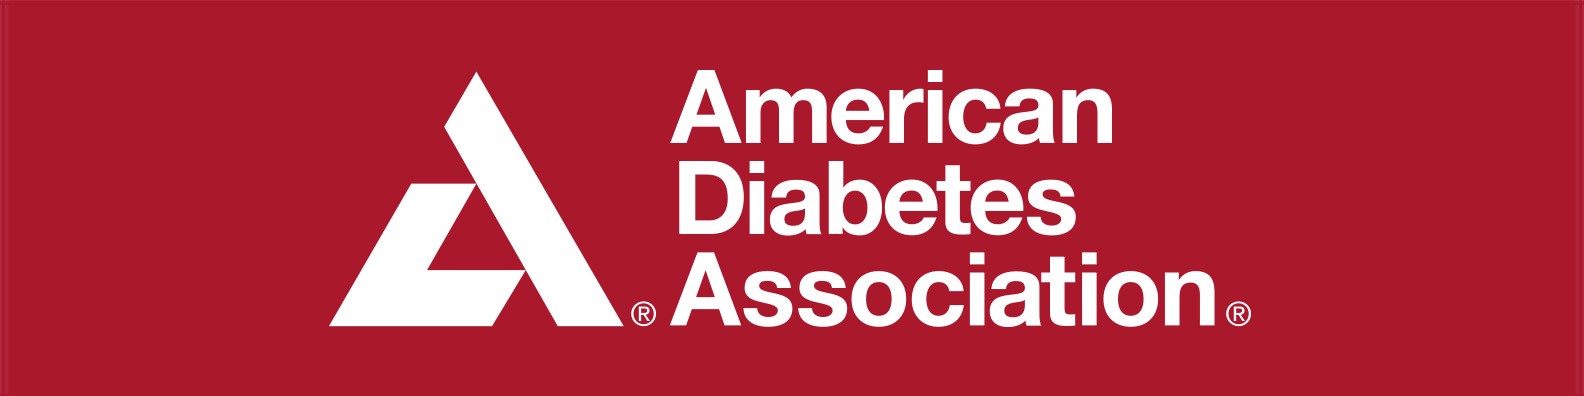 american diabetes association facebook)